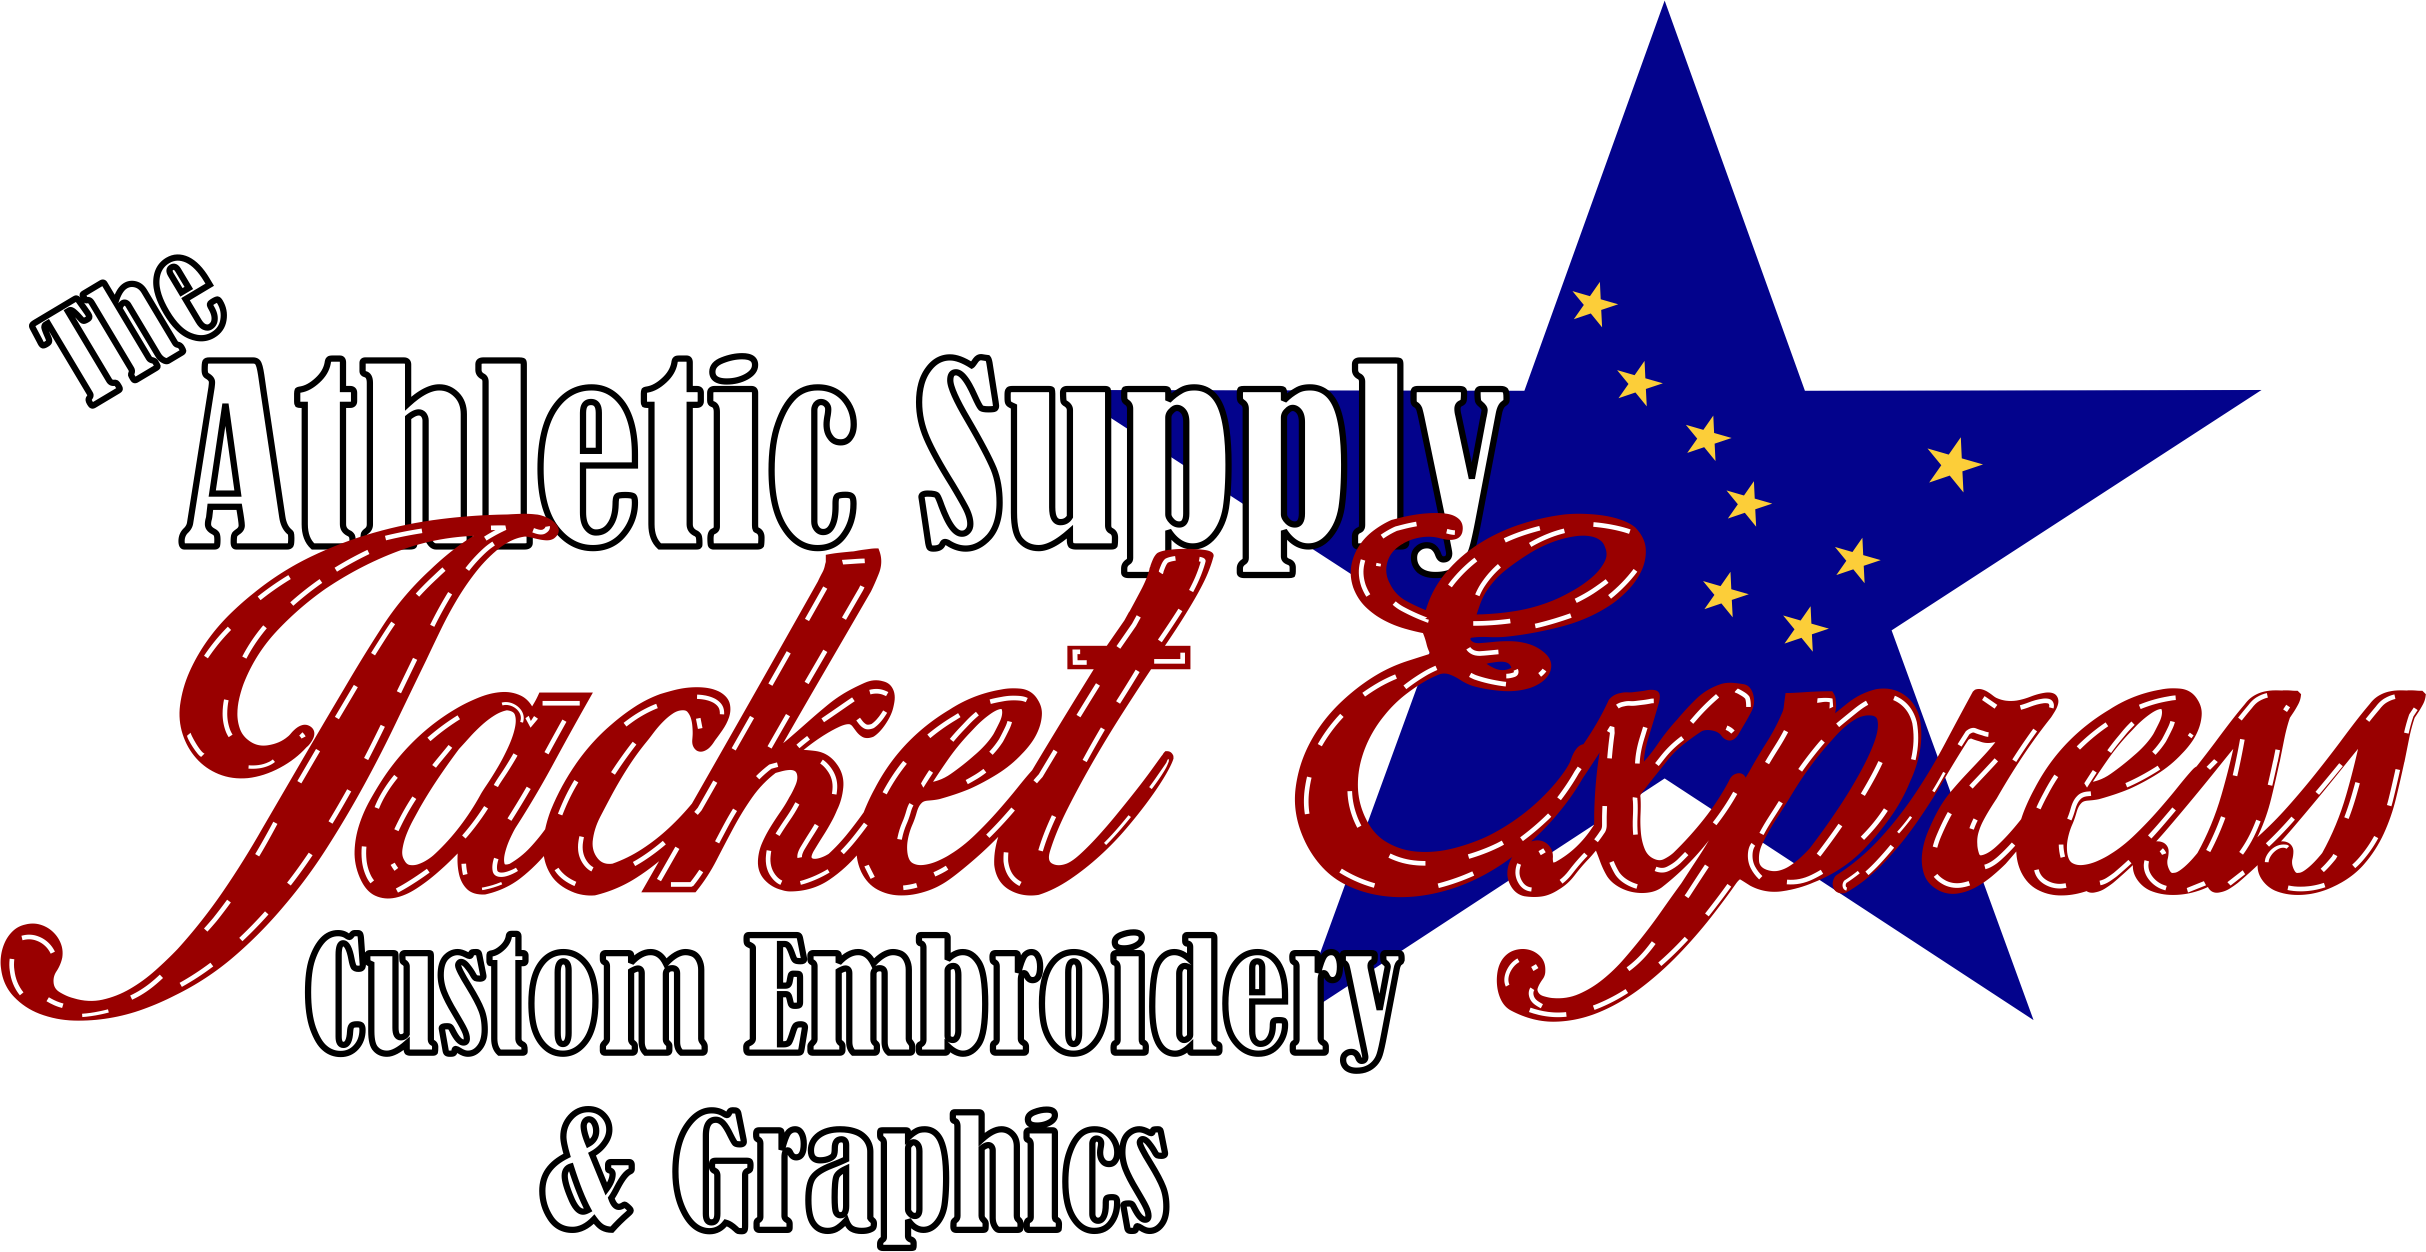 The Athletic Supply Jacket Express's Logo